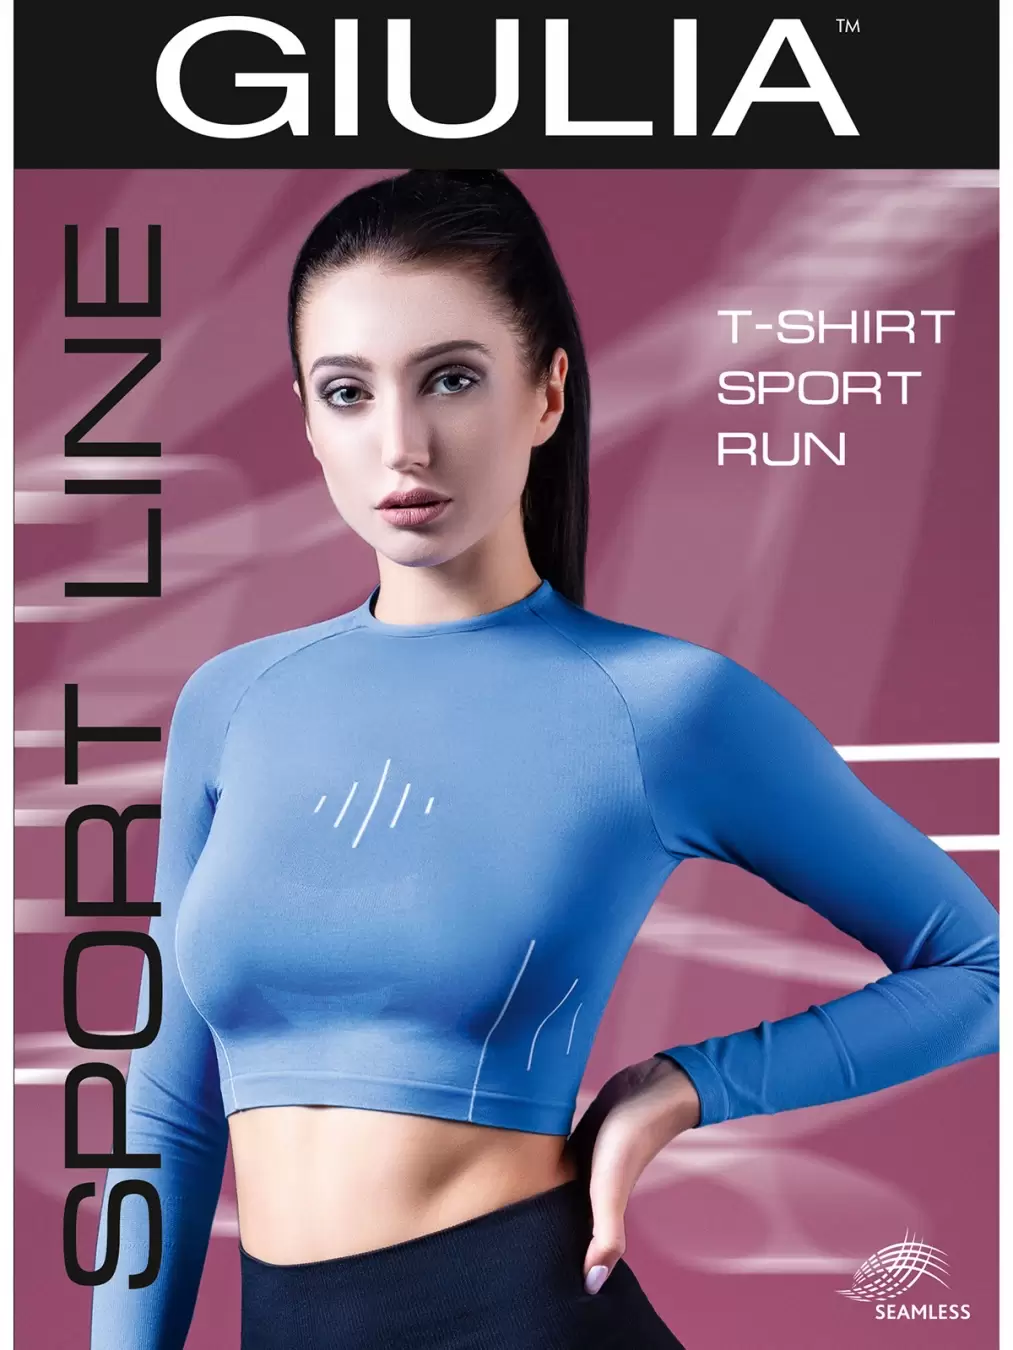 Giulia T-SHIRT SPORT RUN 01, спортивная футболка лонгслив (изображение 1)